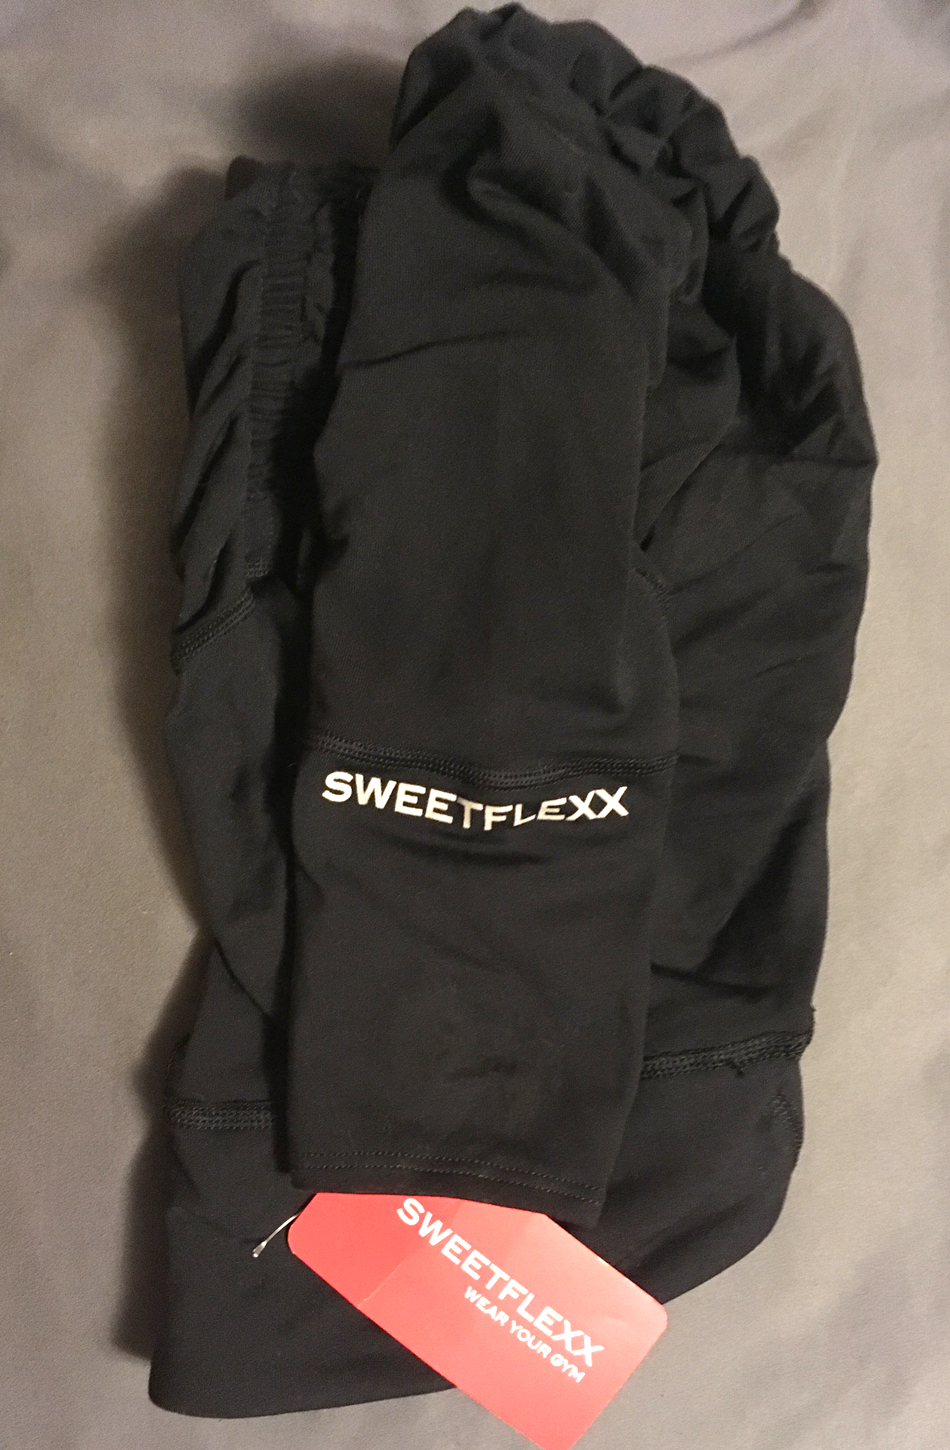 sweetflexx reviews leggings｜TikTok Search